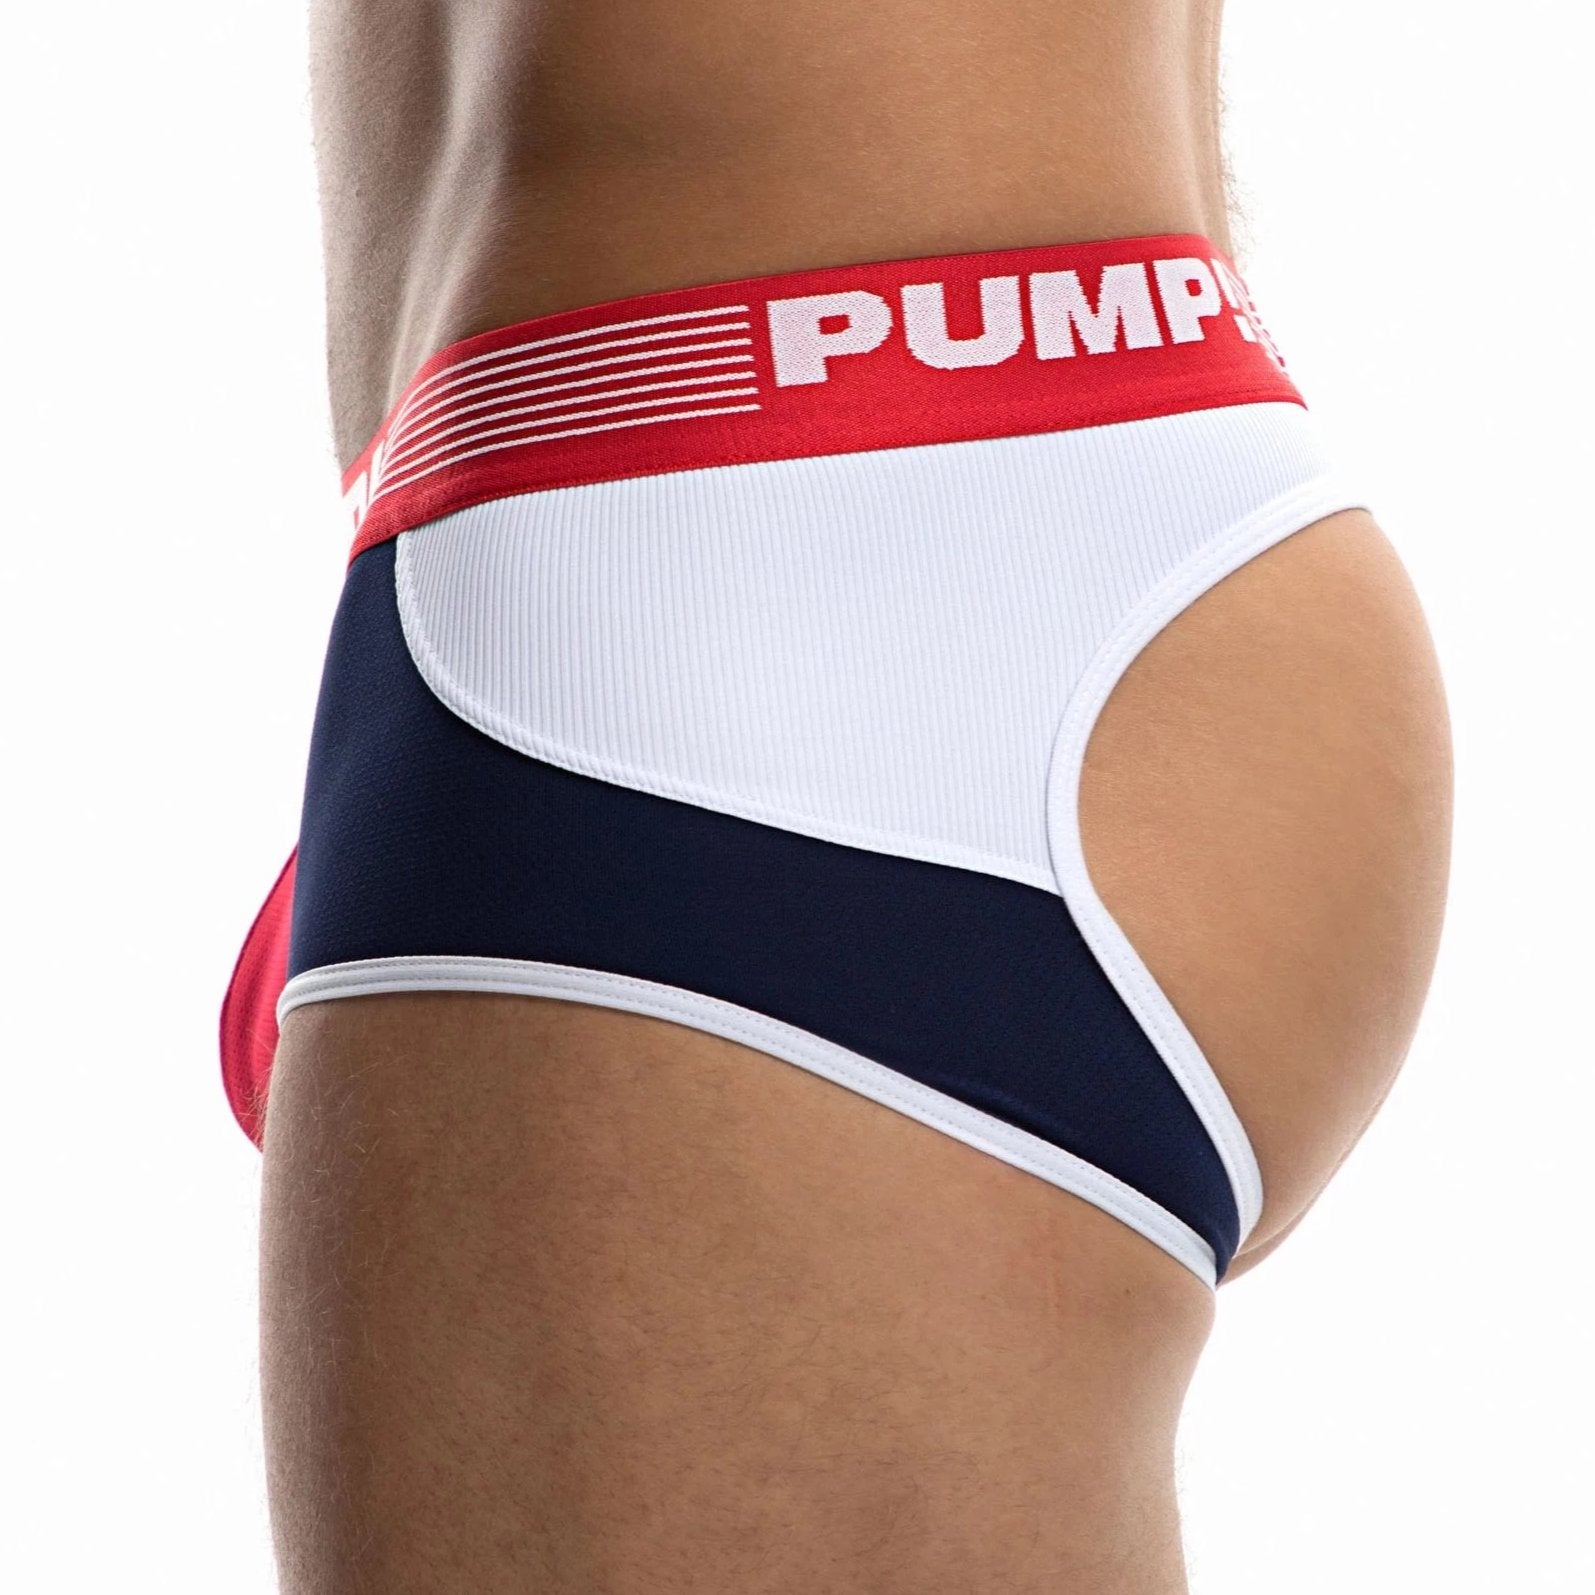 Academy Access Trunk Boxer Back by PUMP! Underwear at Trenderwear.com